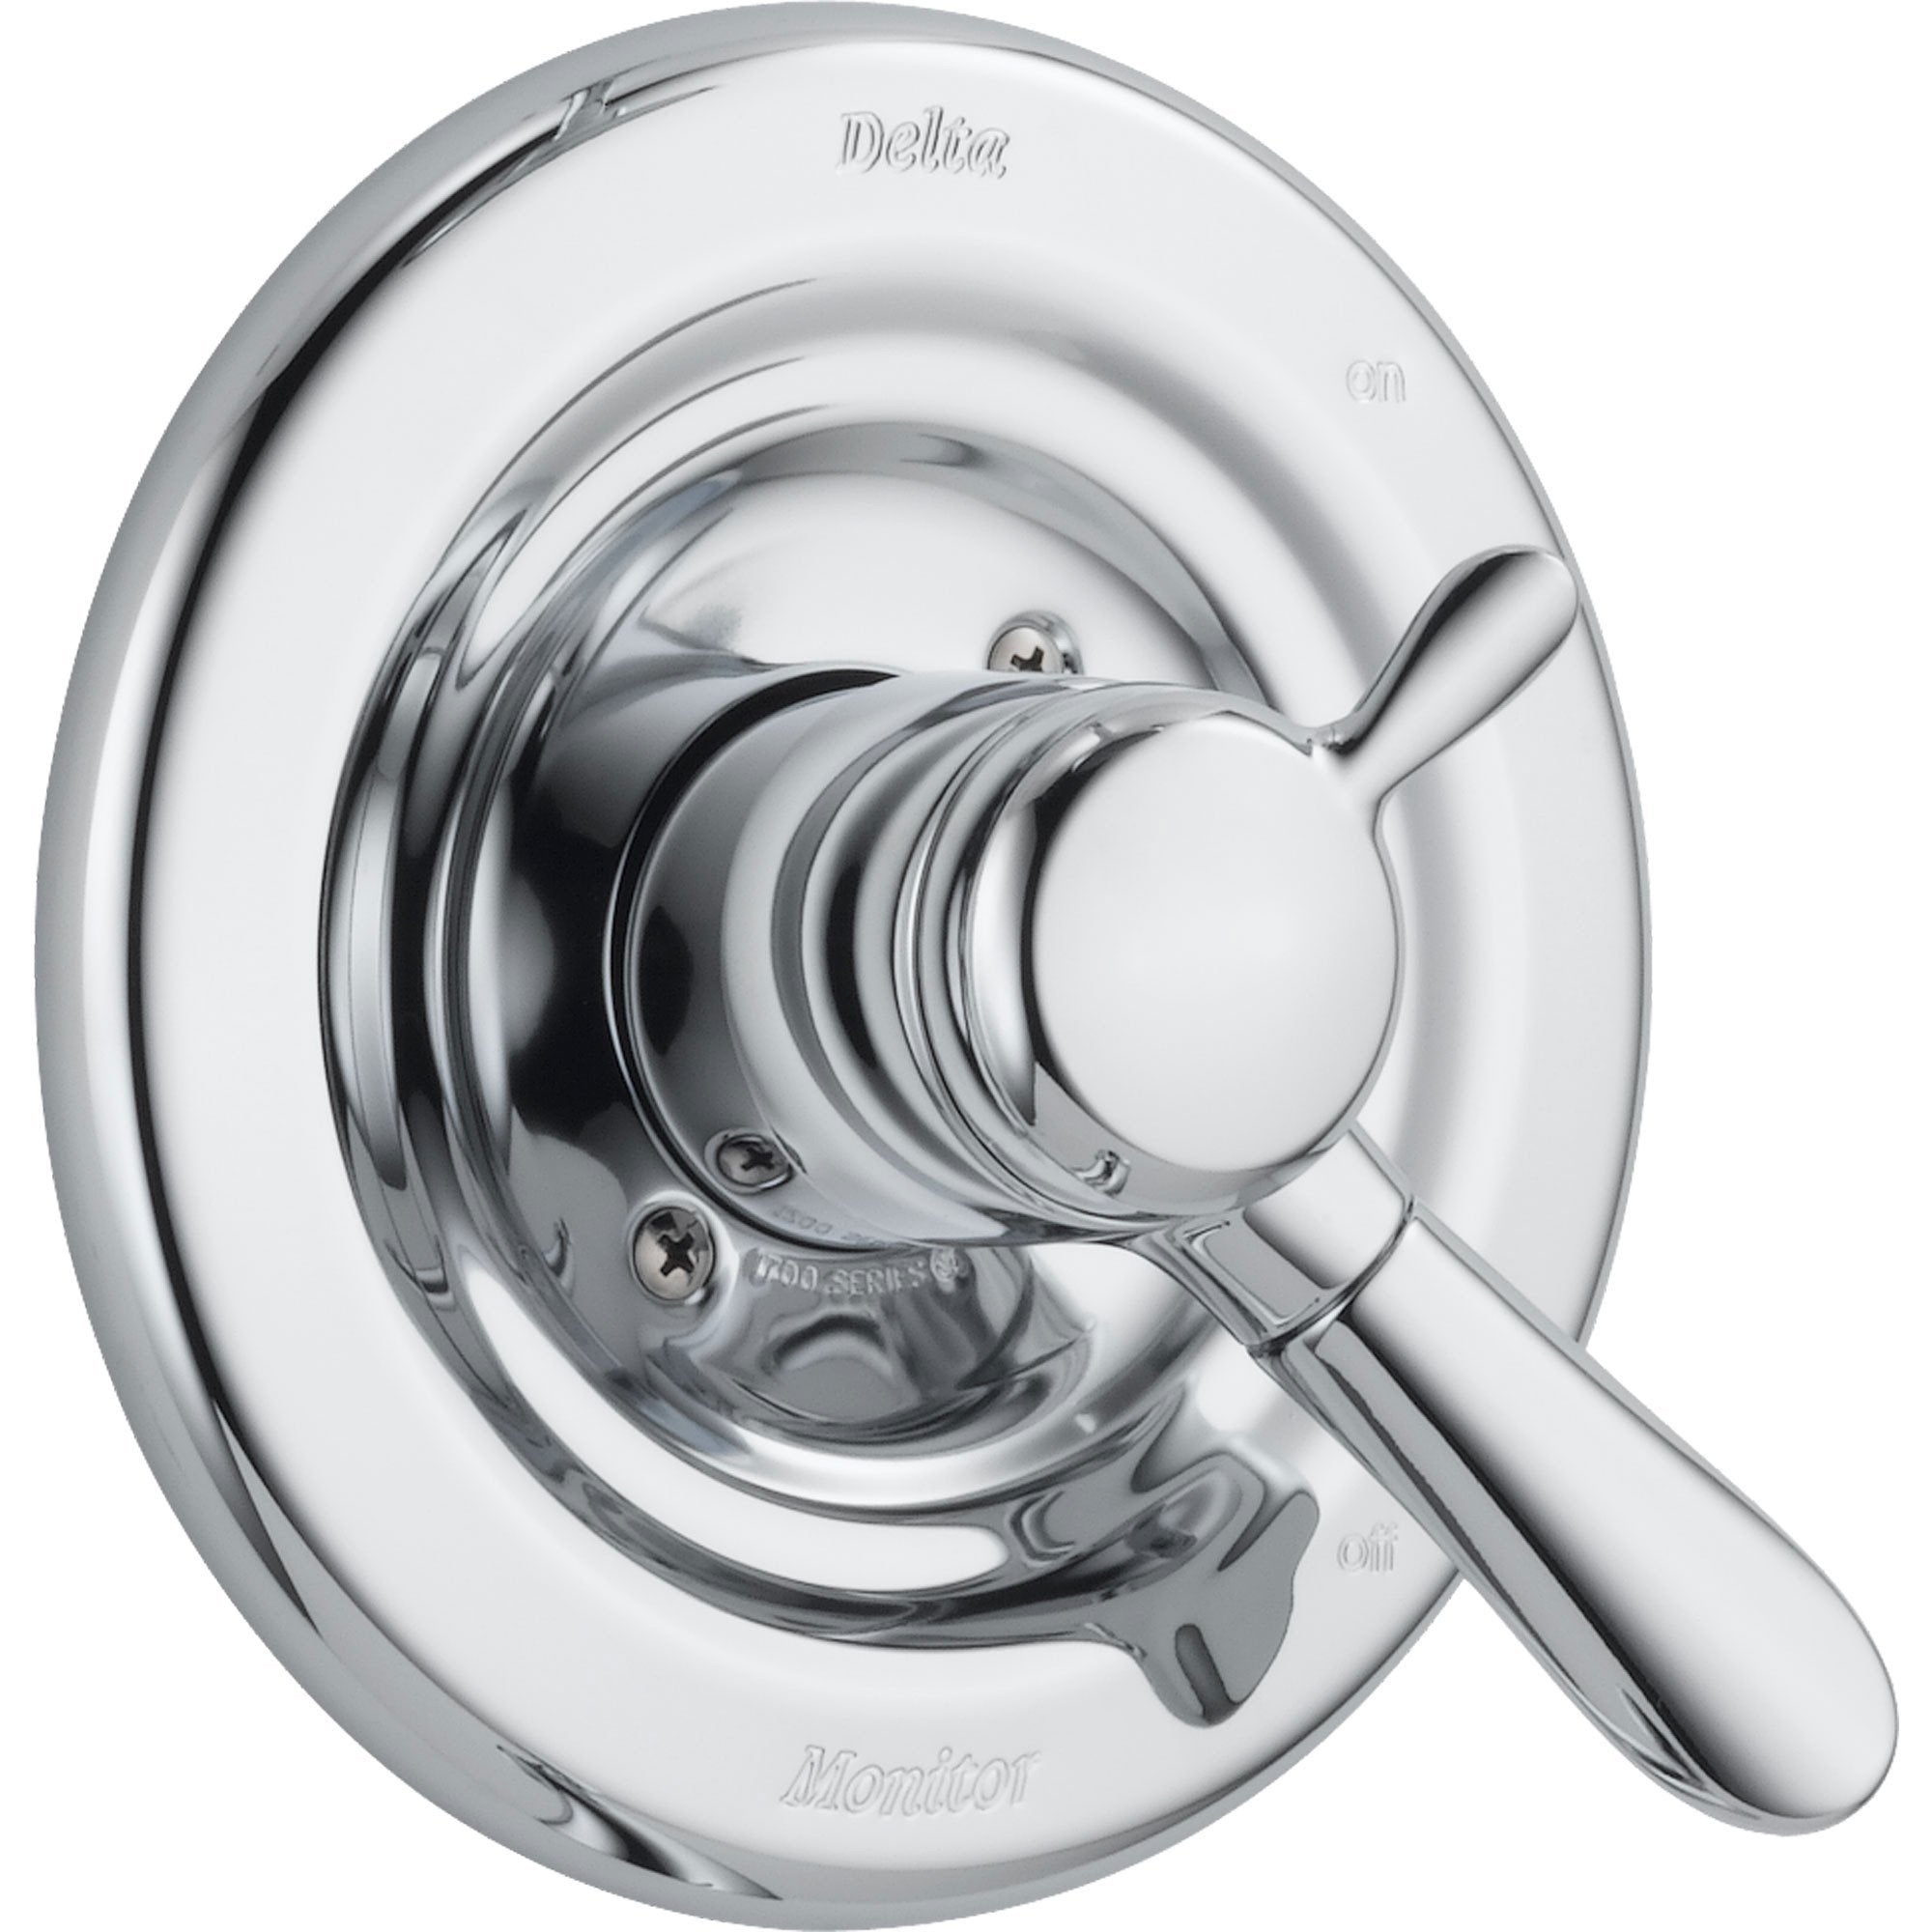 Delta Lahara Temperature and Volume Control Chrome Shower Faucet Trim kit 338201